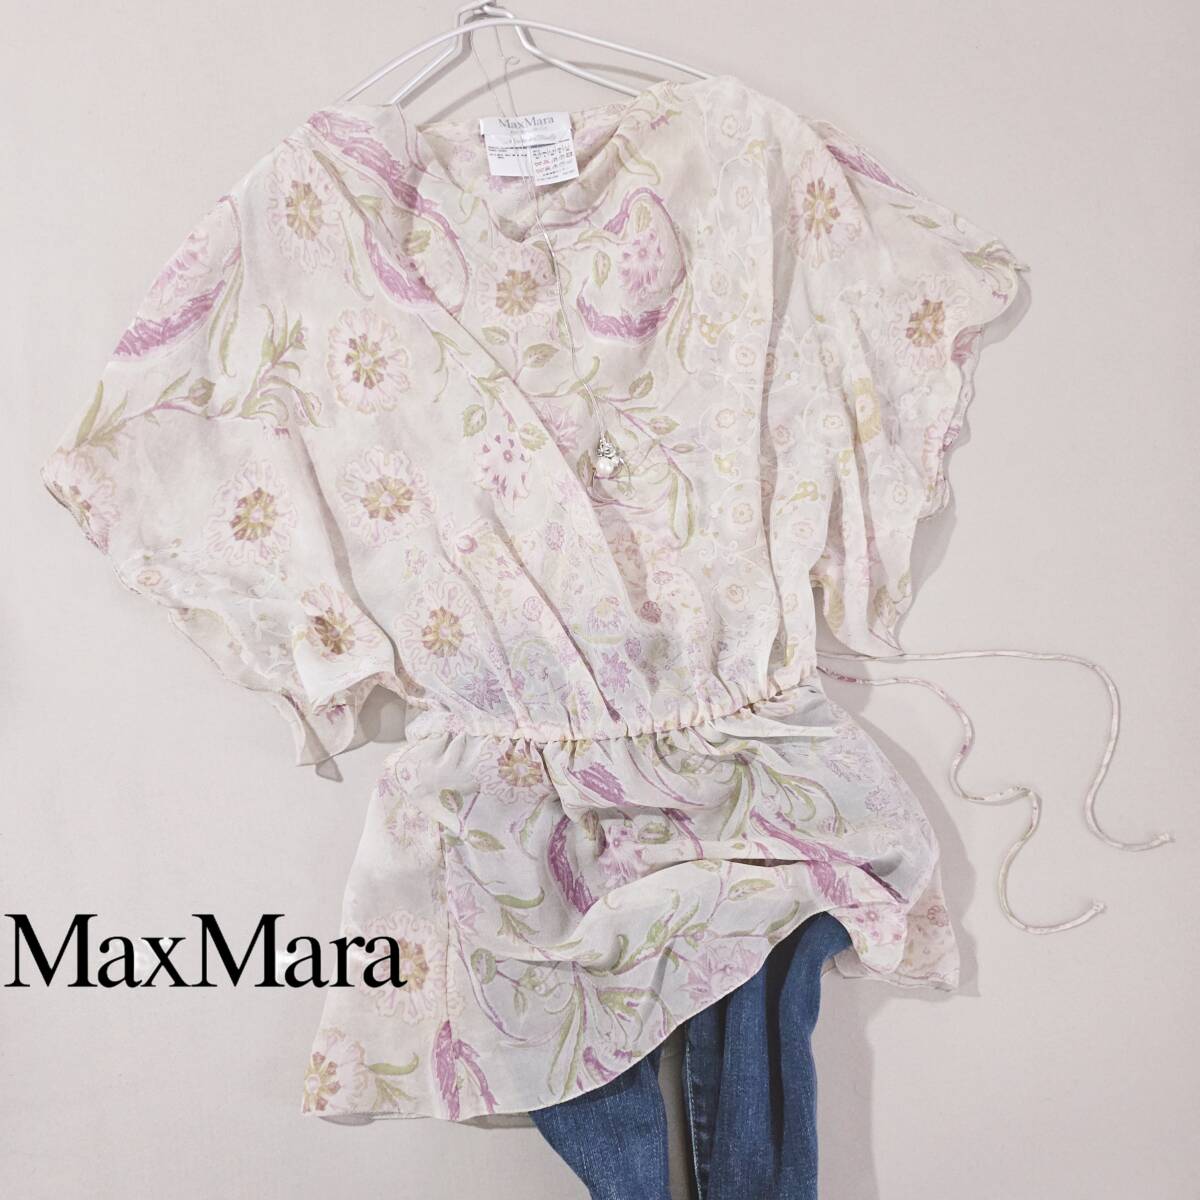  unused tag attaching Max Mara white tag 25 ten thousand silk 100% 2 point set beautiful botanikaru pattern tunic blouse 